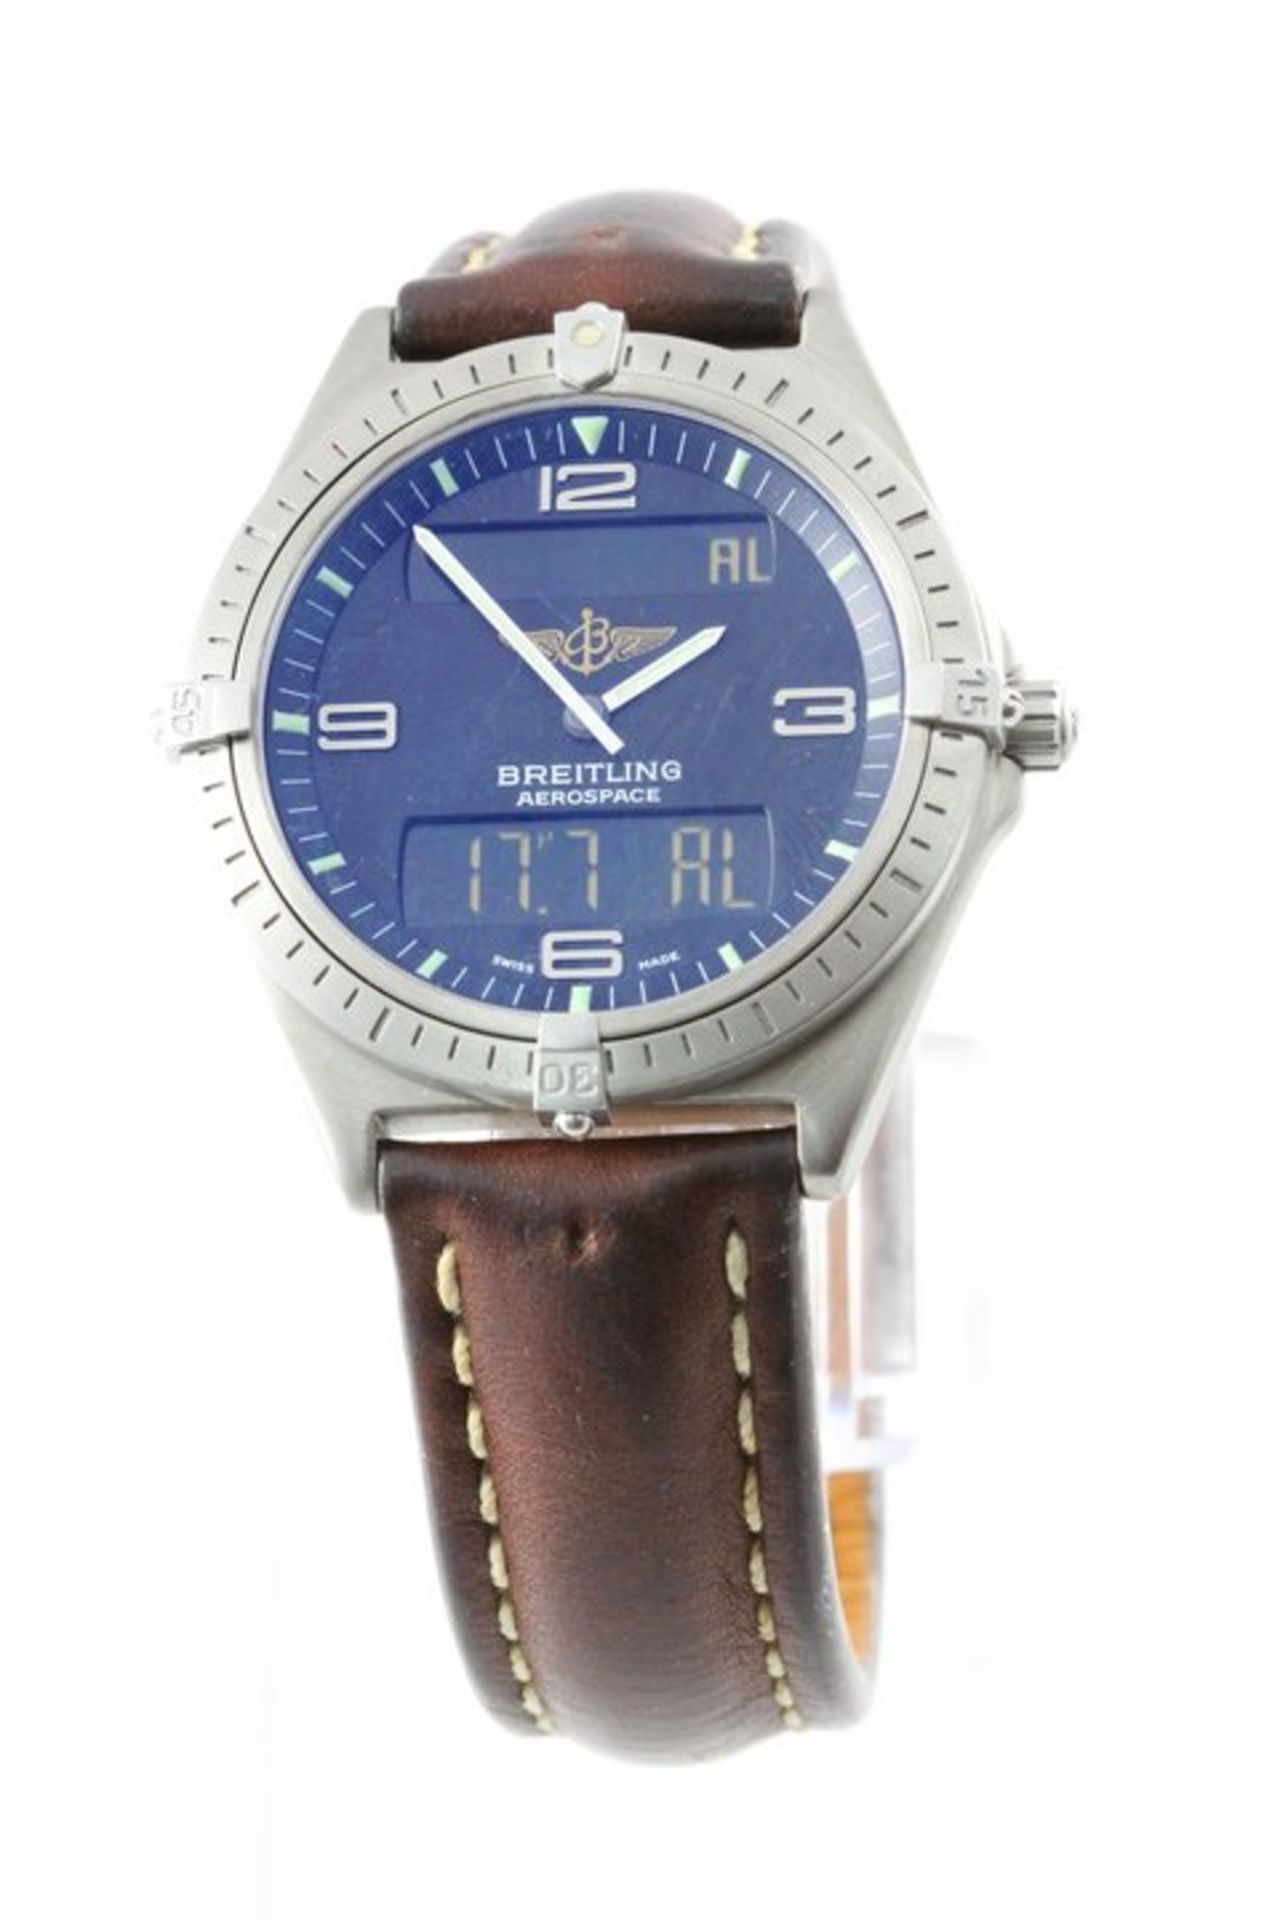 Breitling Aerospace Gents Titanium Watch - Image 3 of 8